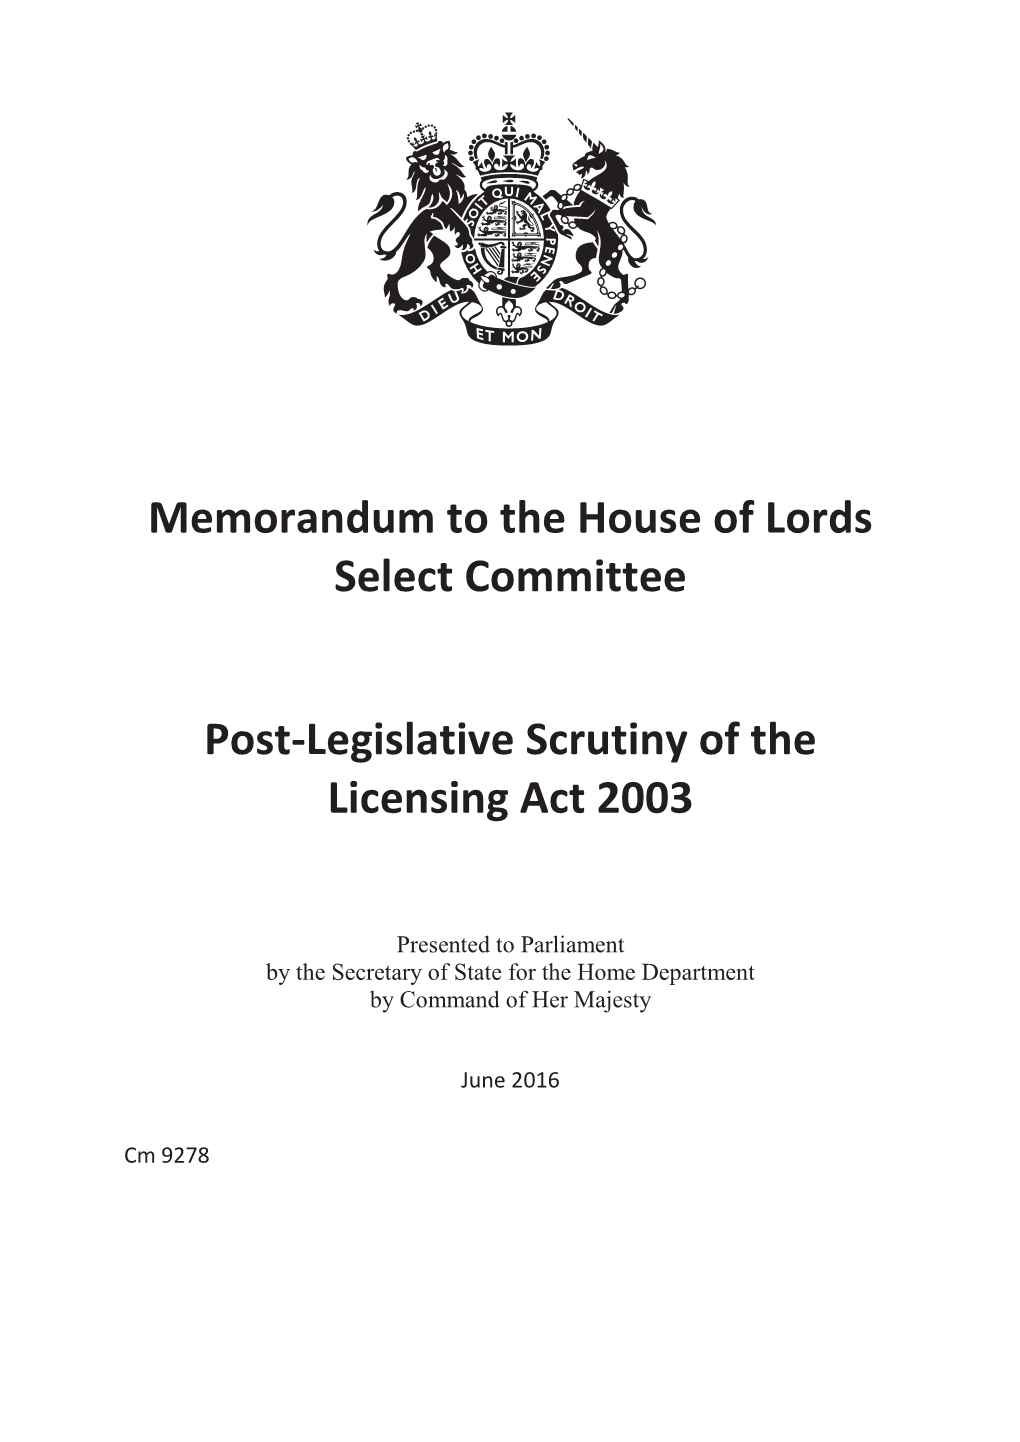 Post-Legislative Scrutiny of the Licensing Act 2003